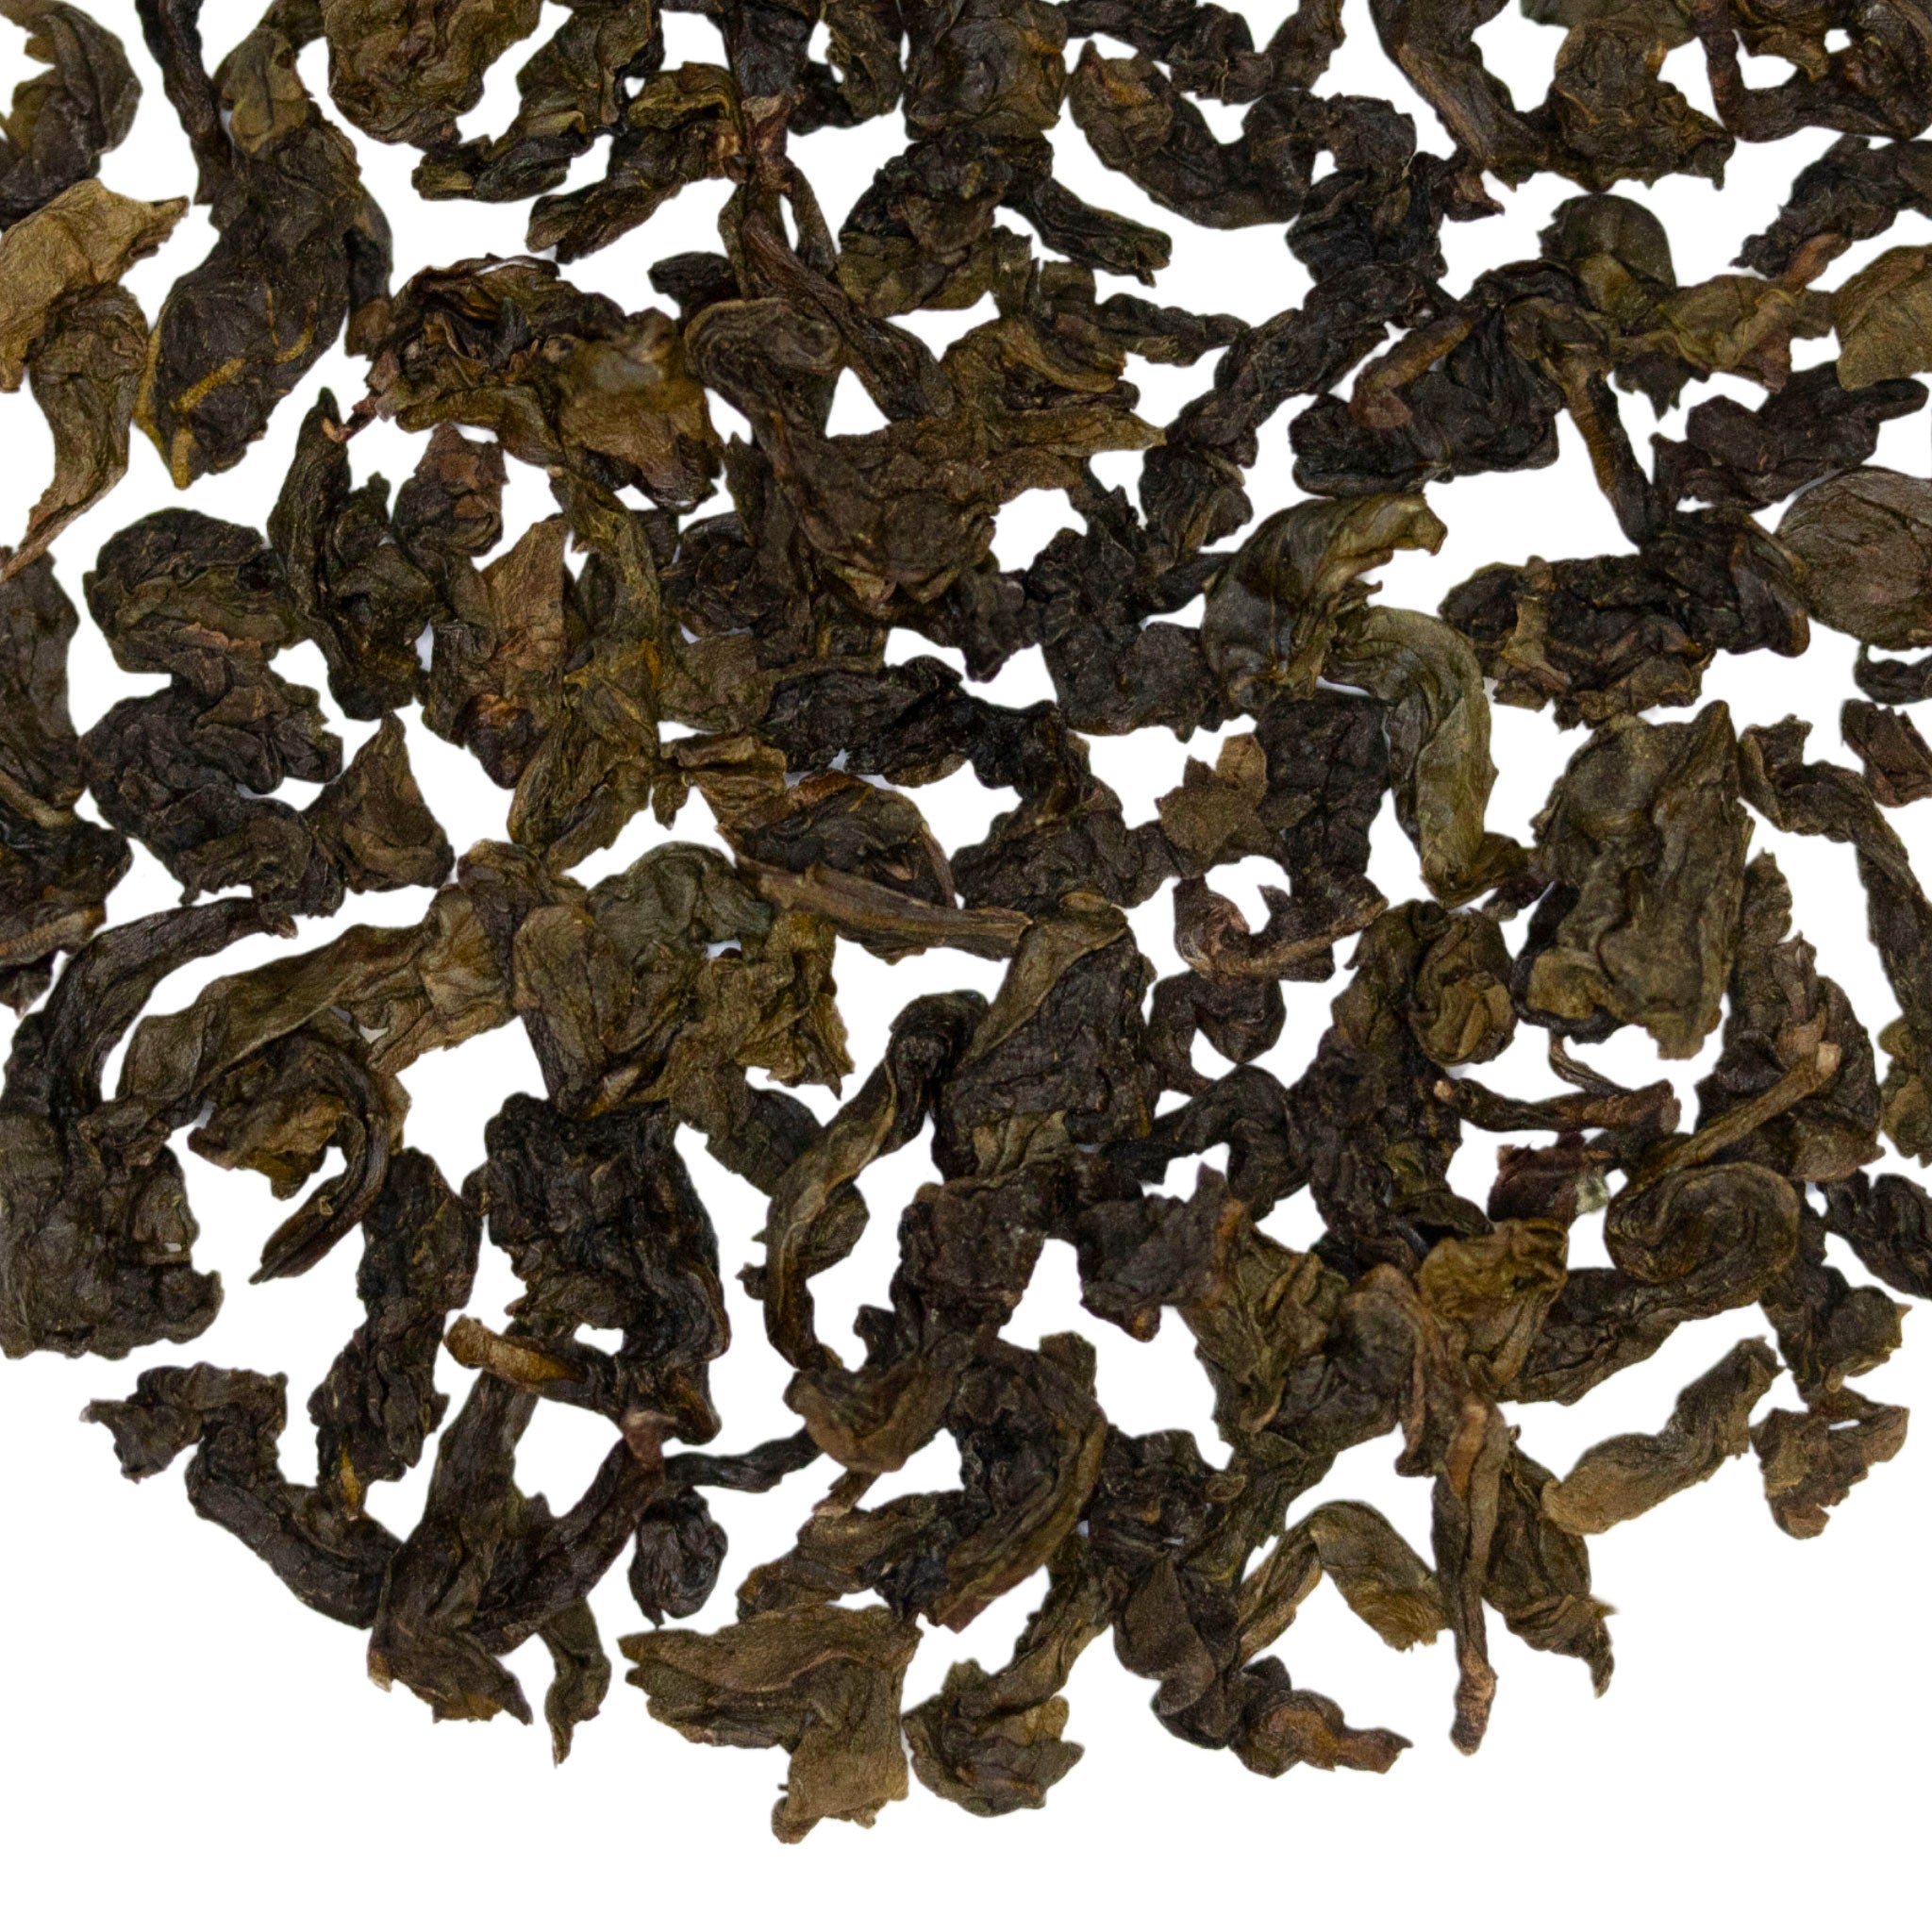 Loose leaf Phantom Power Tieguanyin oolong tea